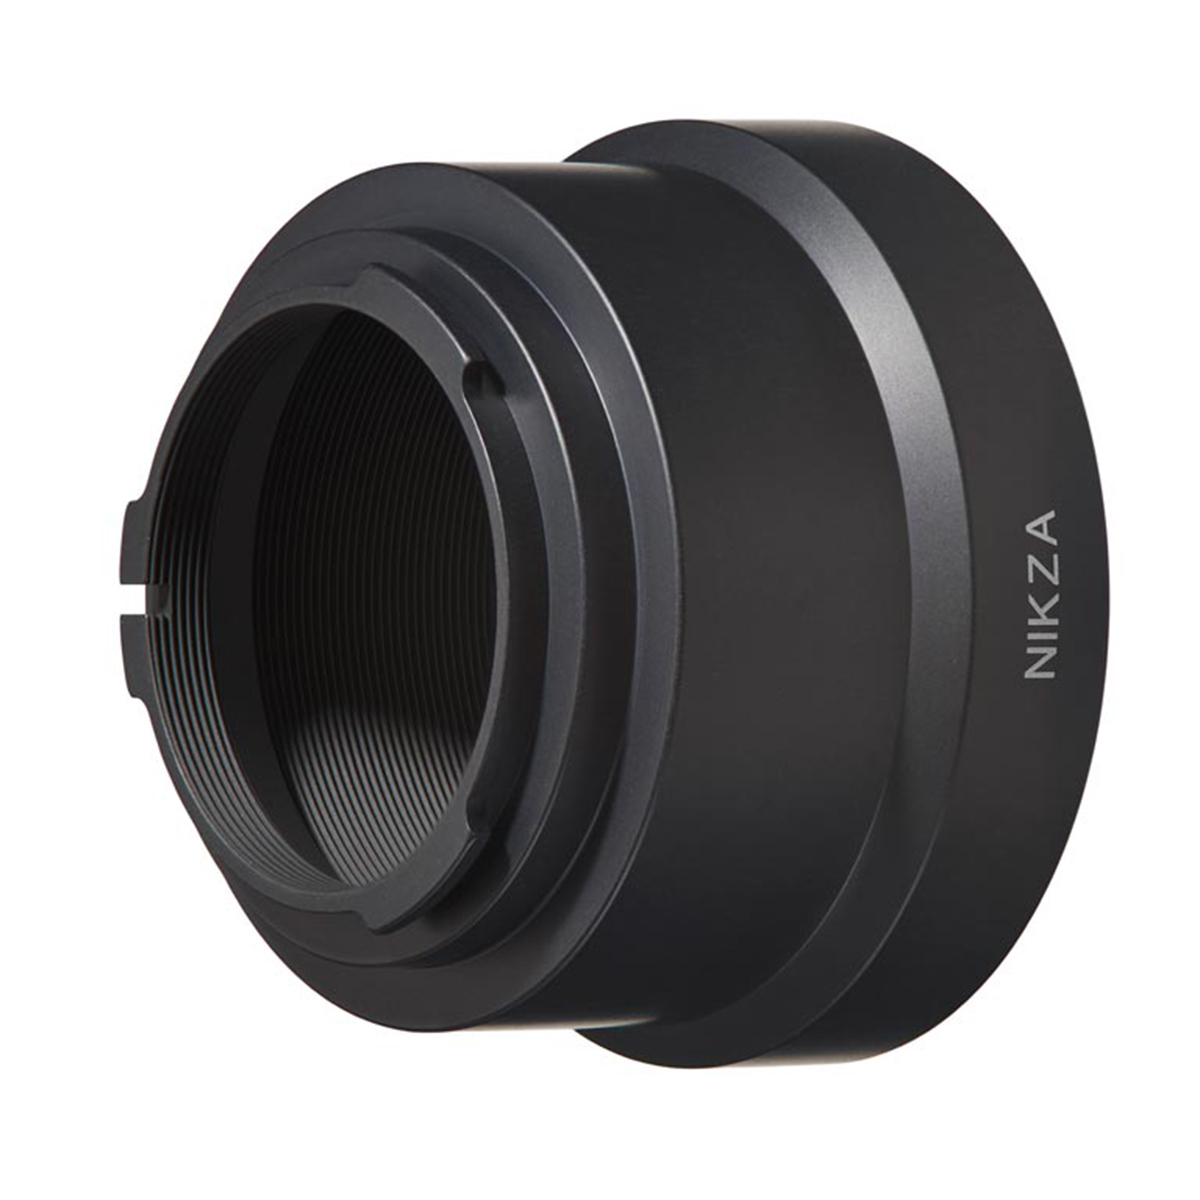 Novoflex Adapter für Nikon Z Kamera an Novoflex Universalbajonett A